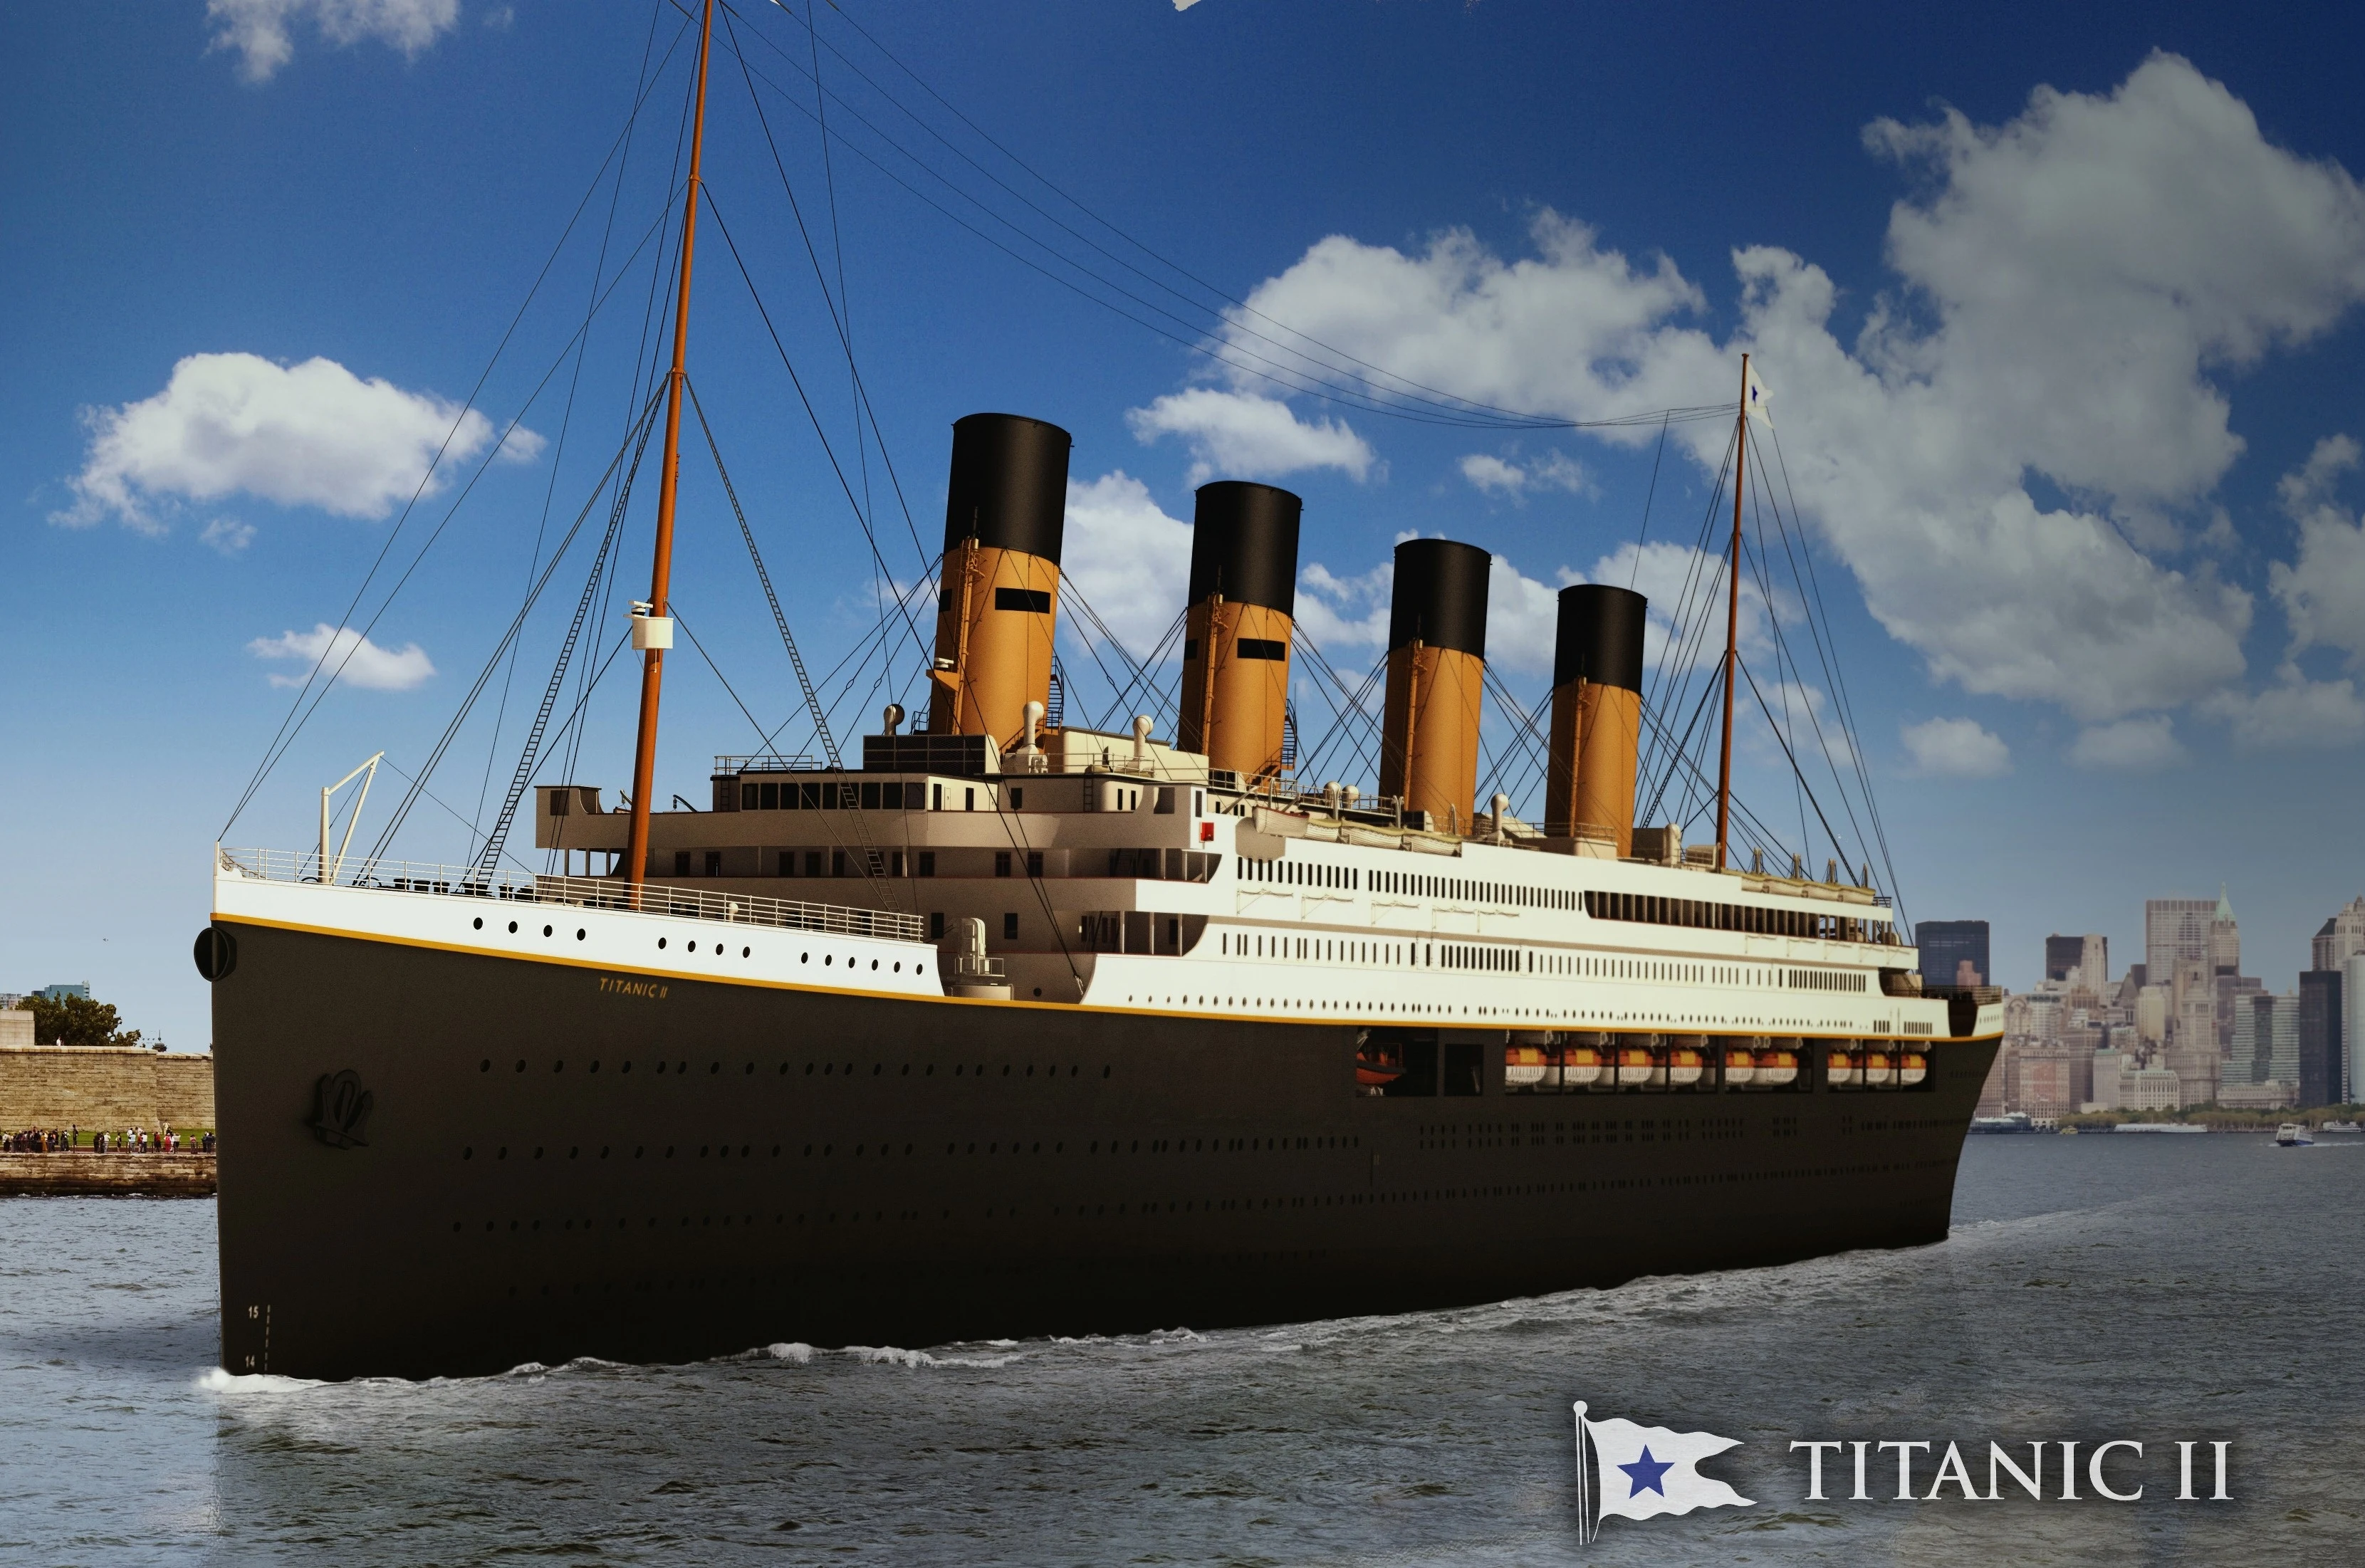 File:Titanic II.jpg - Wikimedia Commons